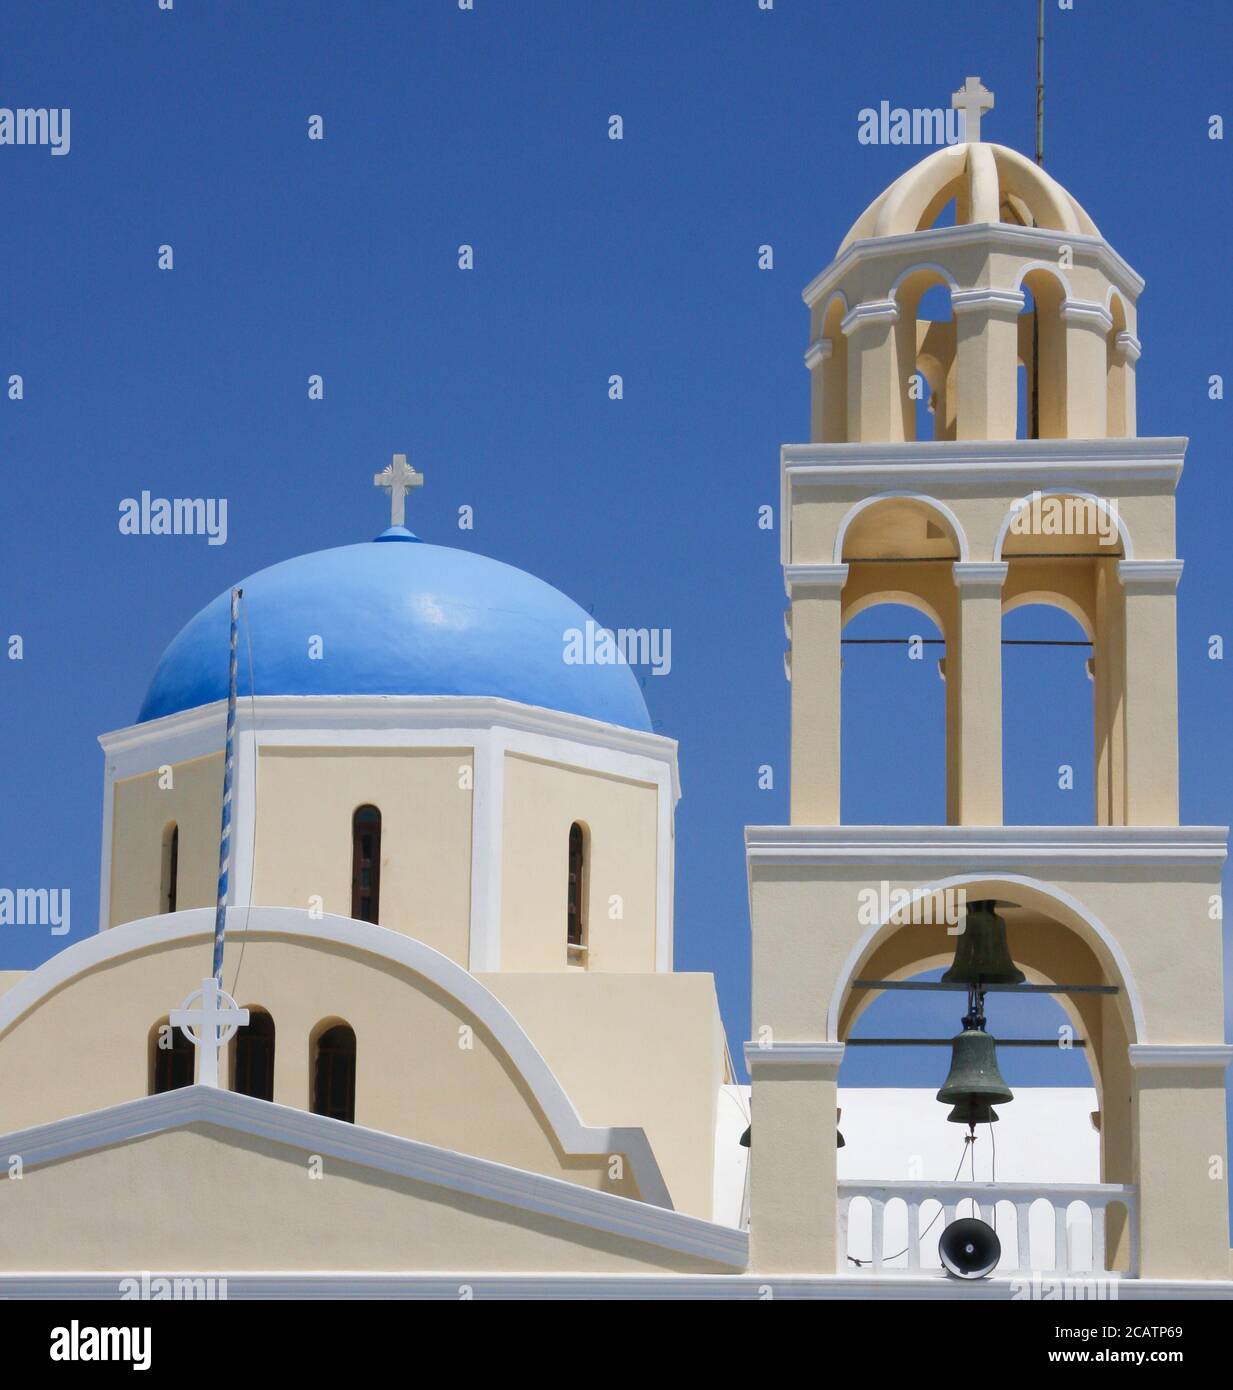 Chiesa di San Giorgio (Eklisia Agios Georgios) primo piano di cupola blu e campanile a Oia, Santorini, Grecia Foto Stock